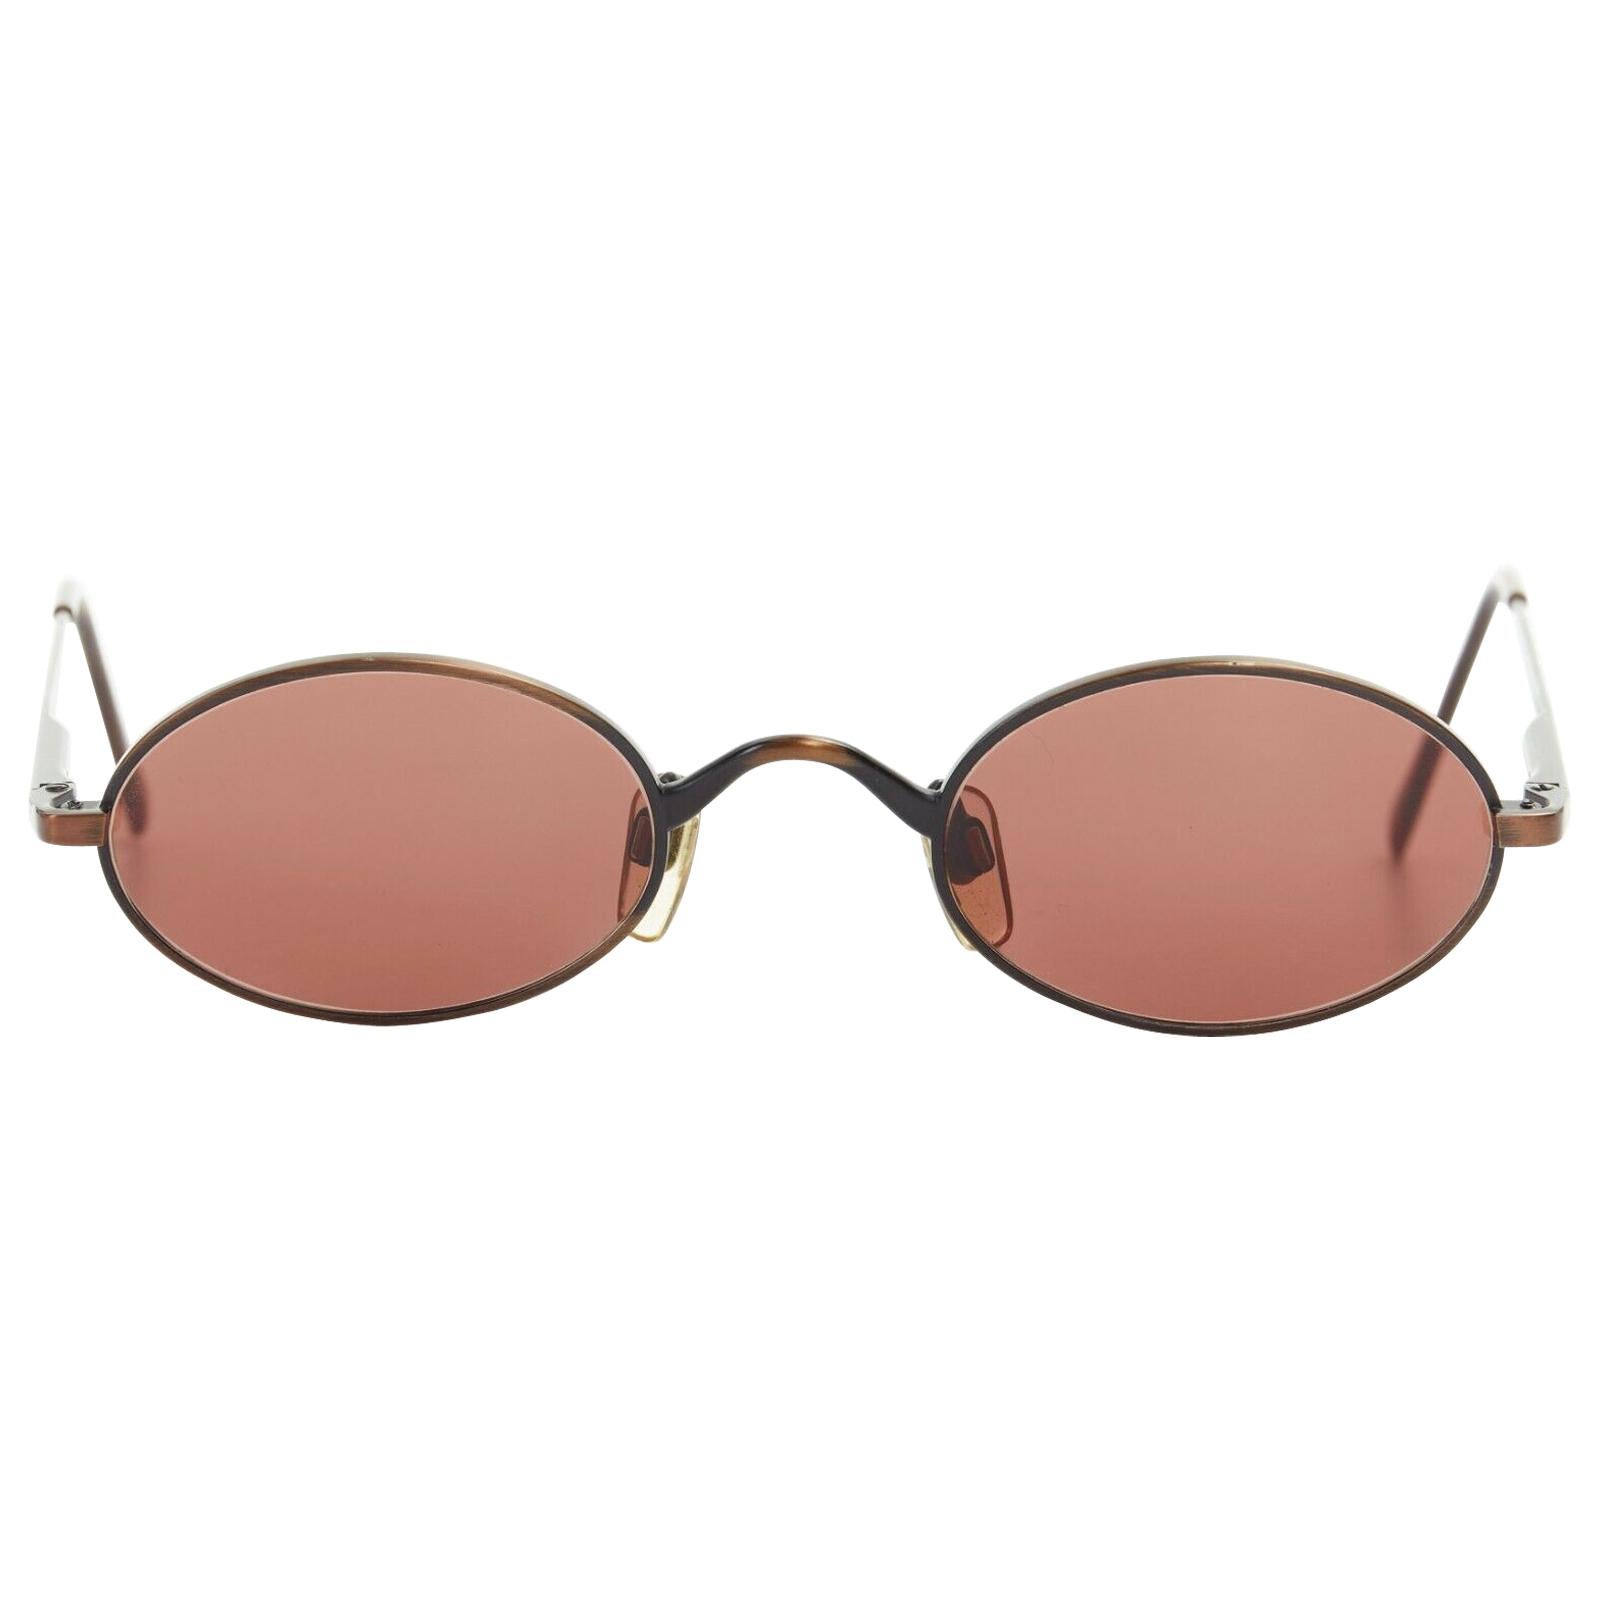 GIORGIO ARMANI dark brown lens metal frame 90's style tiny sunglasses